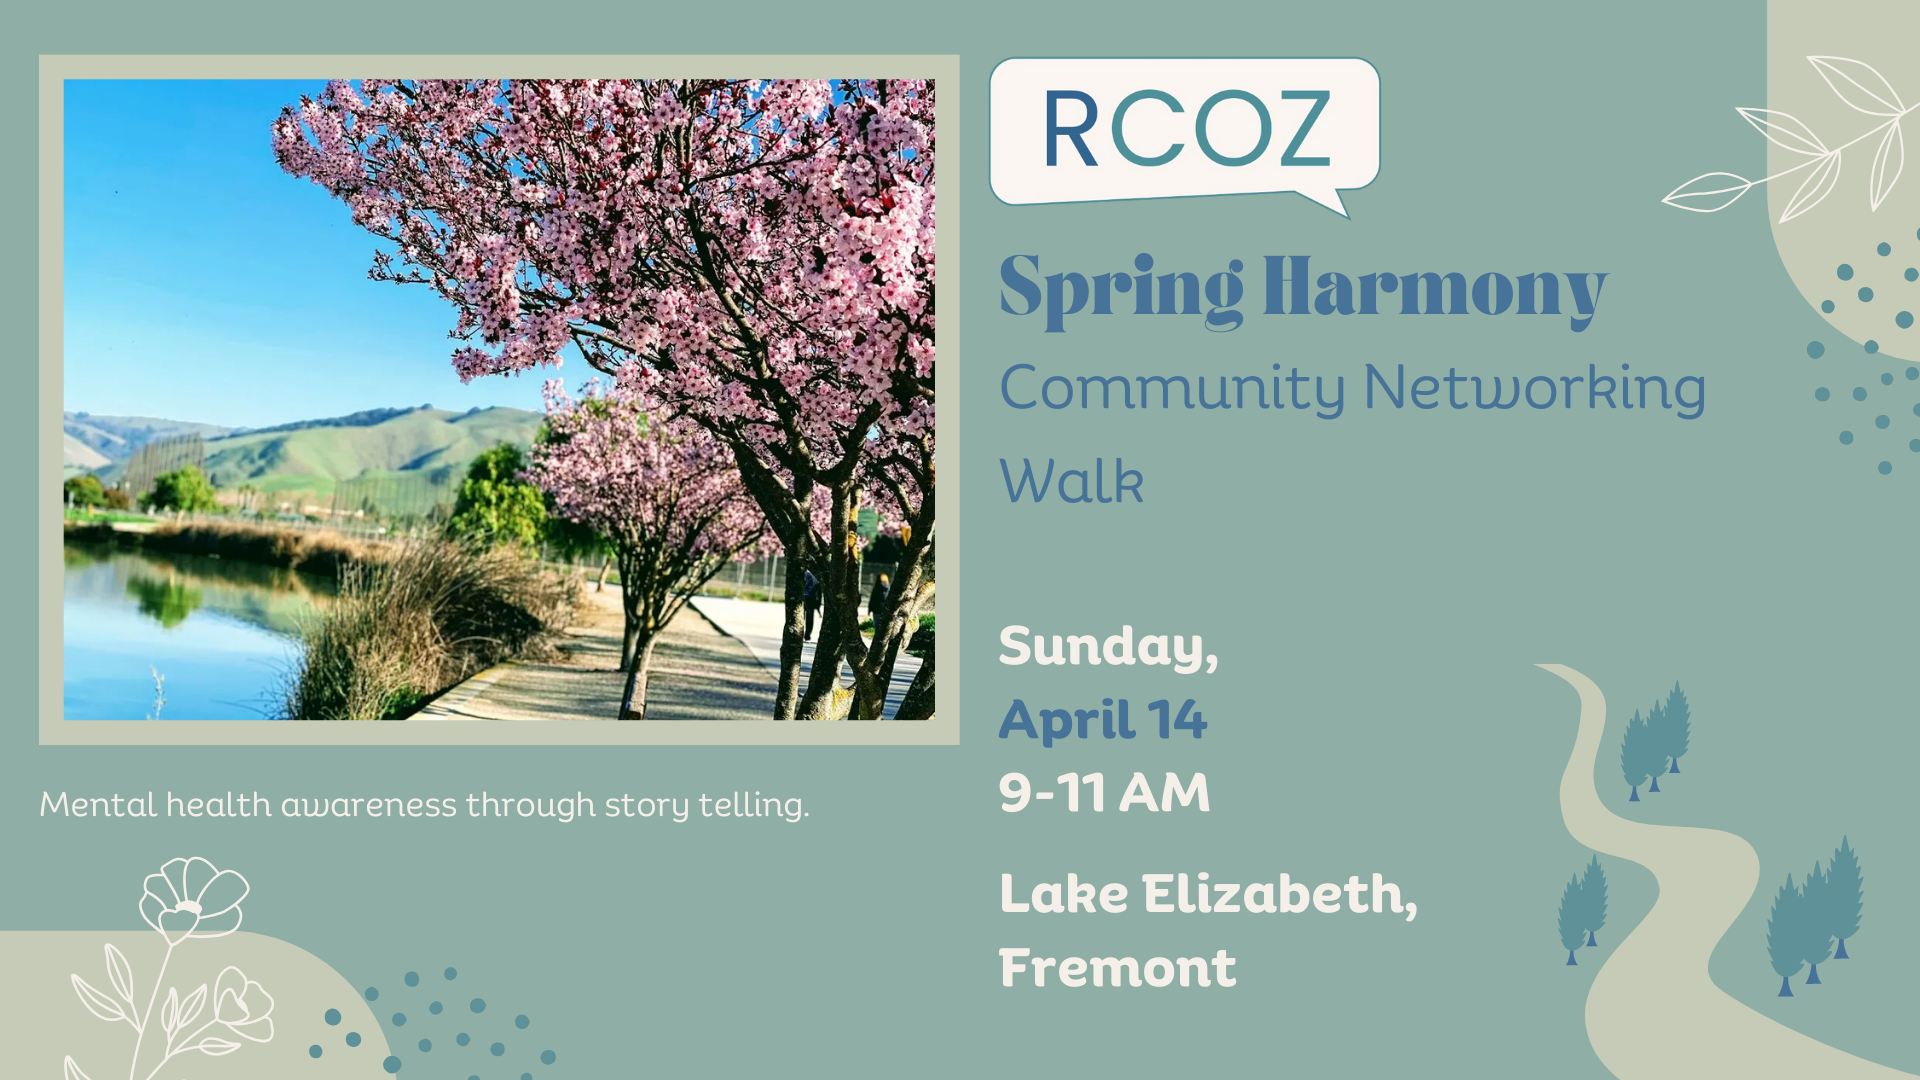 Rcoz Spring Harmony Community Networking Walk on Sunday April 14, 9-11am at Lake Elizabeth, Fremont